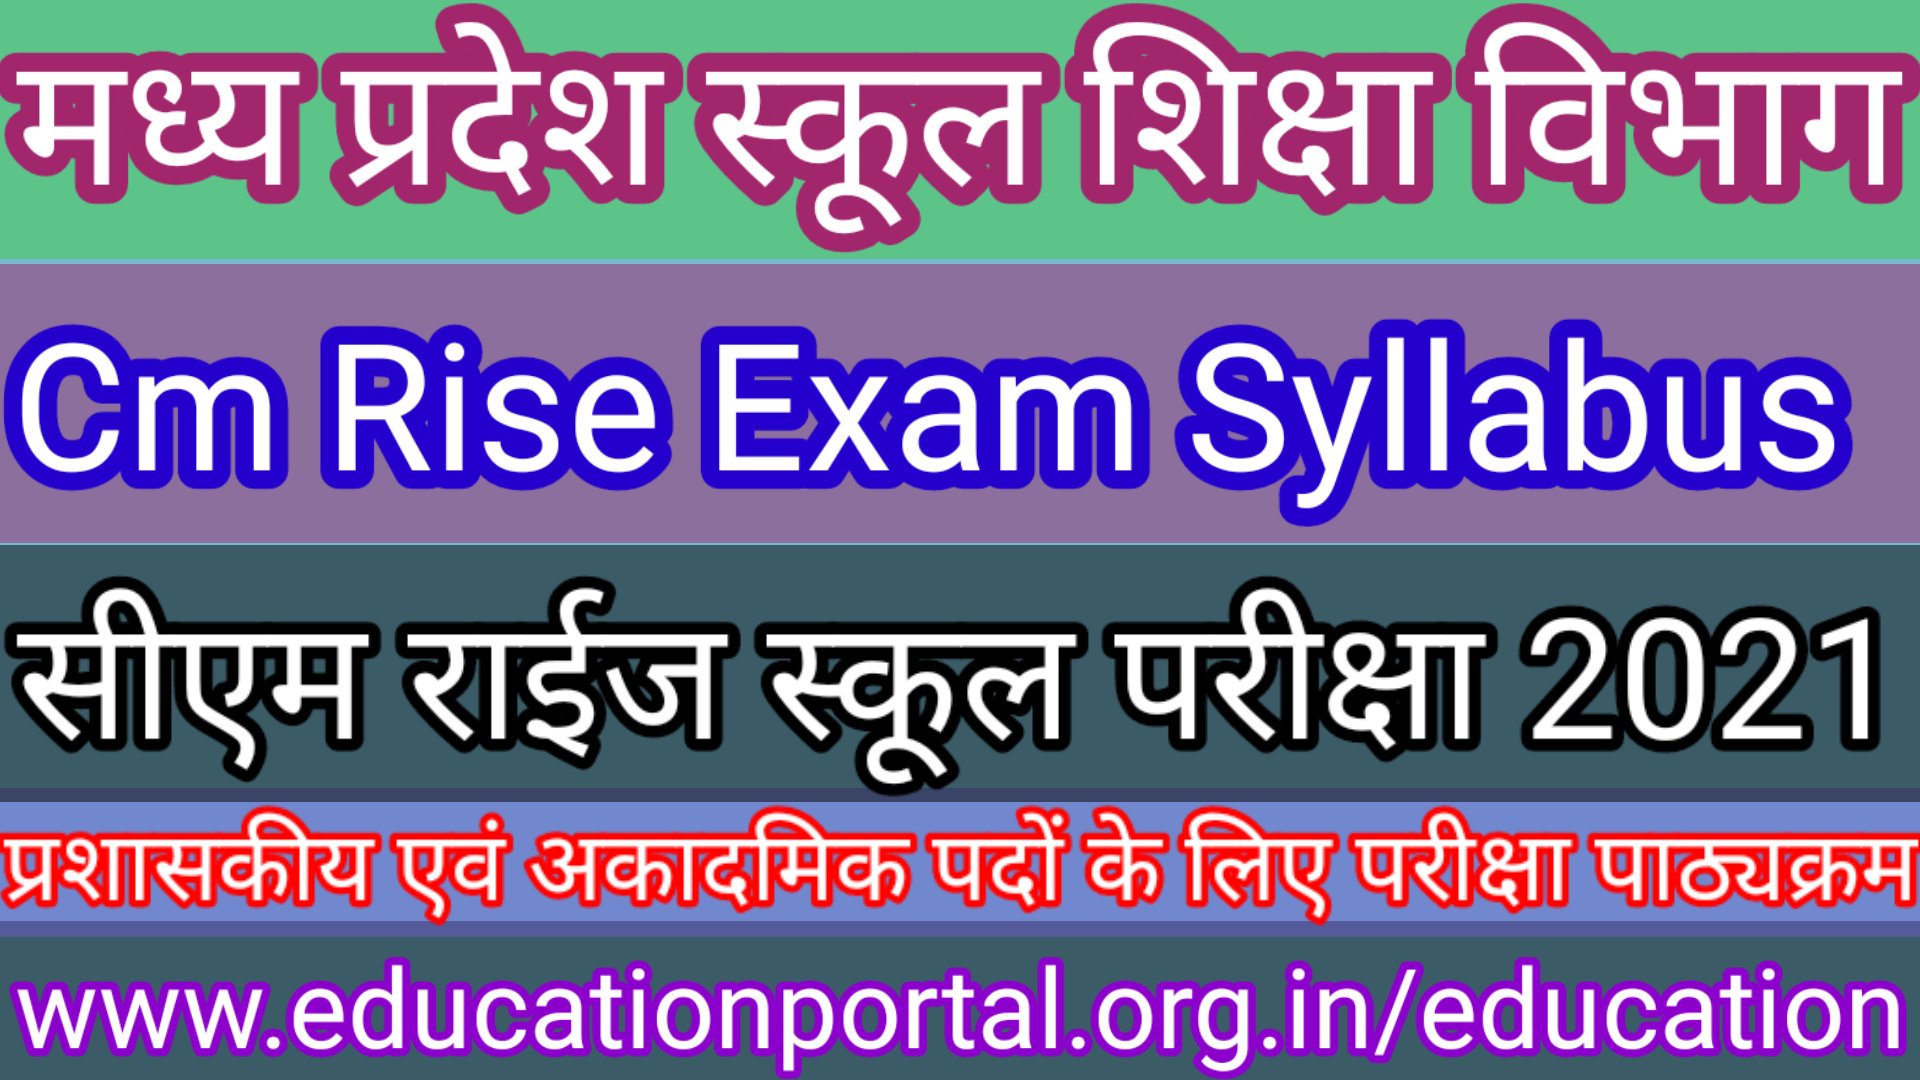 CM Rise School Teacher Selection Test Syllabus सीएम राइज स्कूल शिक्षक परीक्षा पाठ्यक्रम 2021, 7 नवंबर को आयोजित होगी परीक्षा